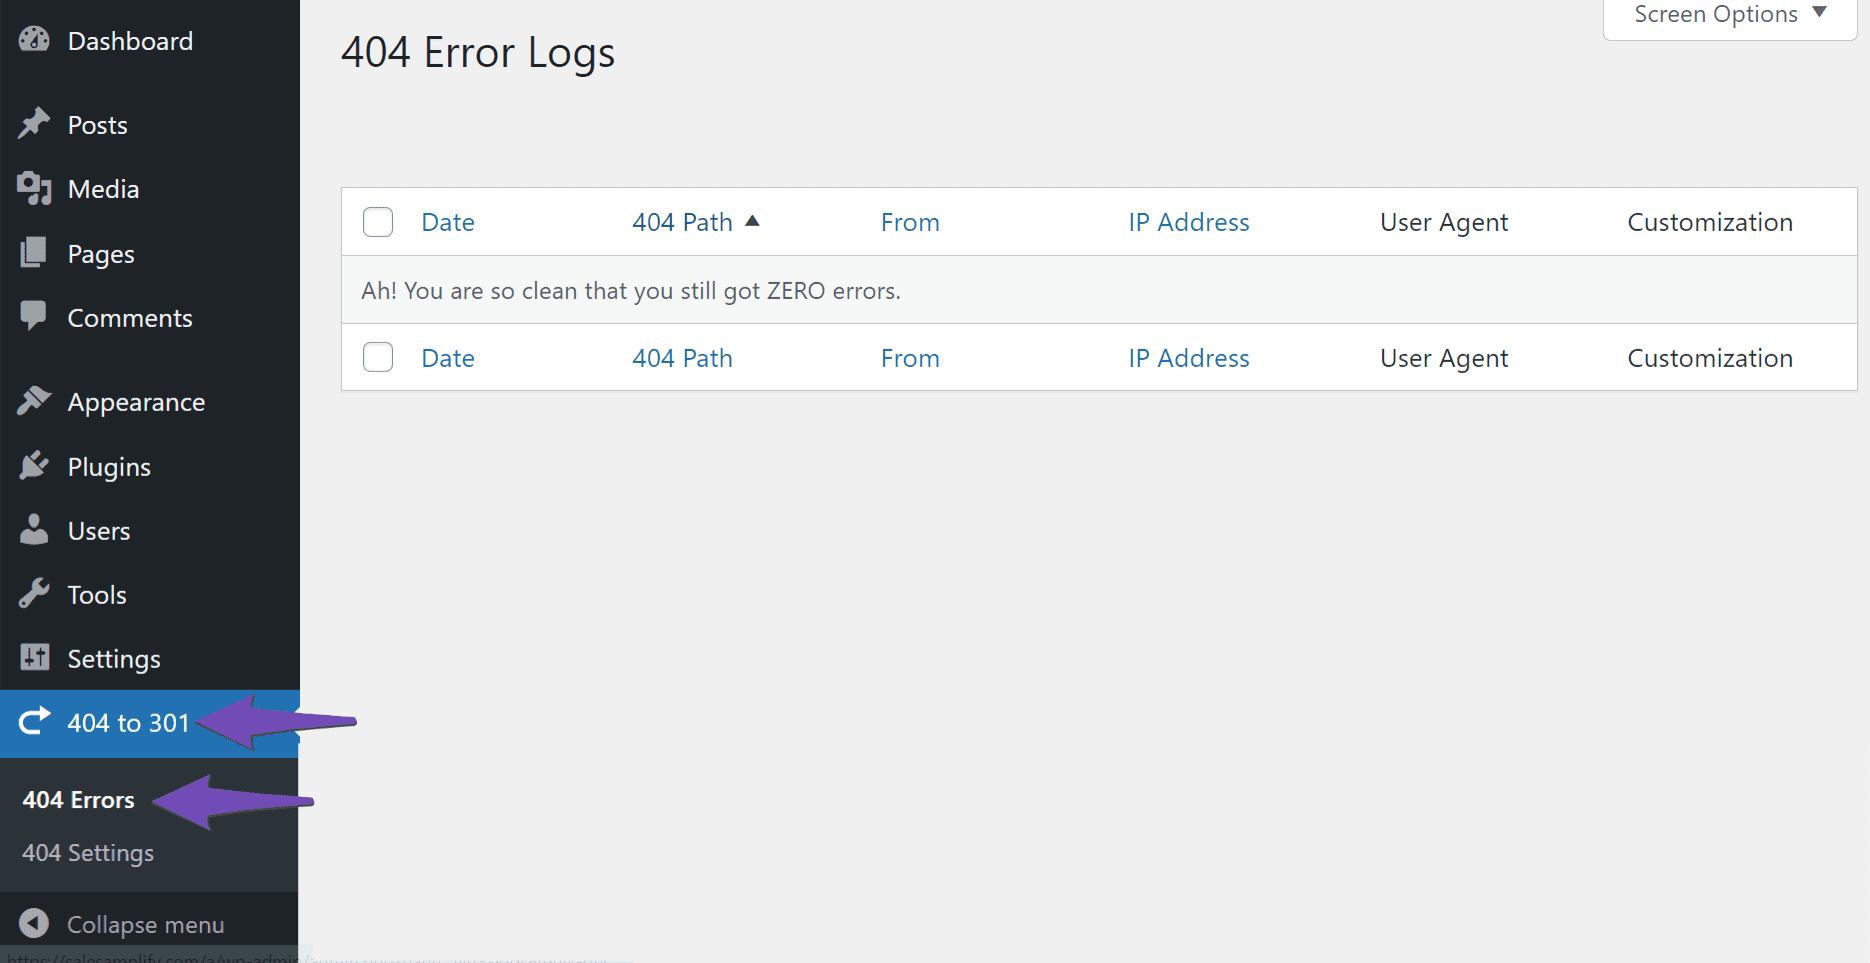 Sample of the 404 Error Logs